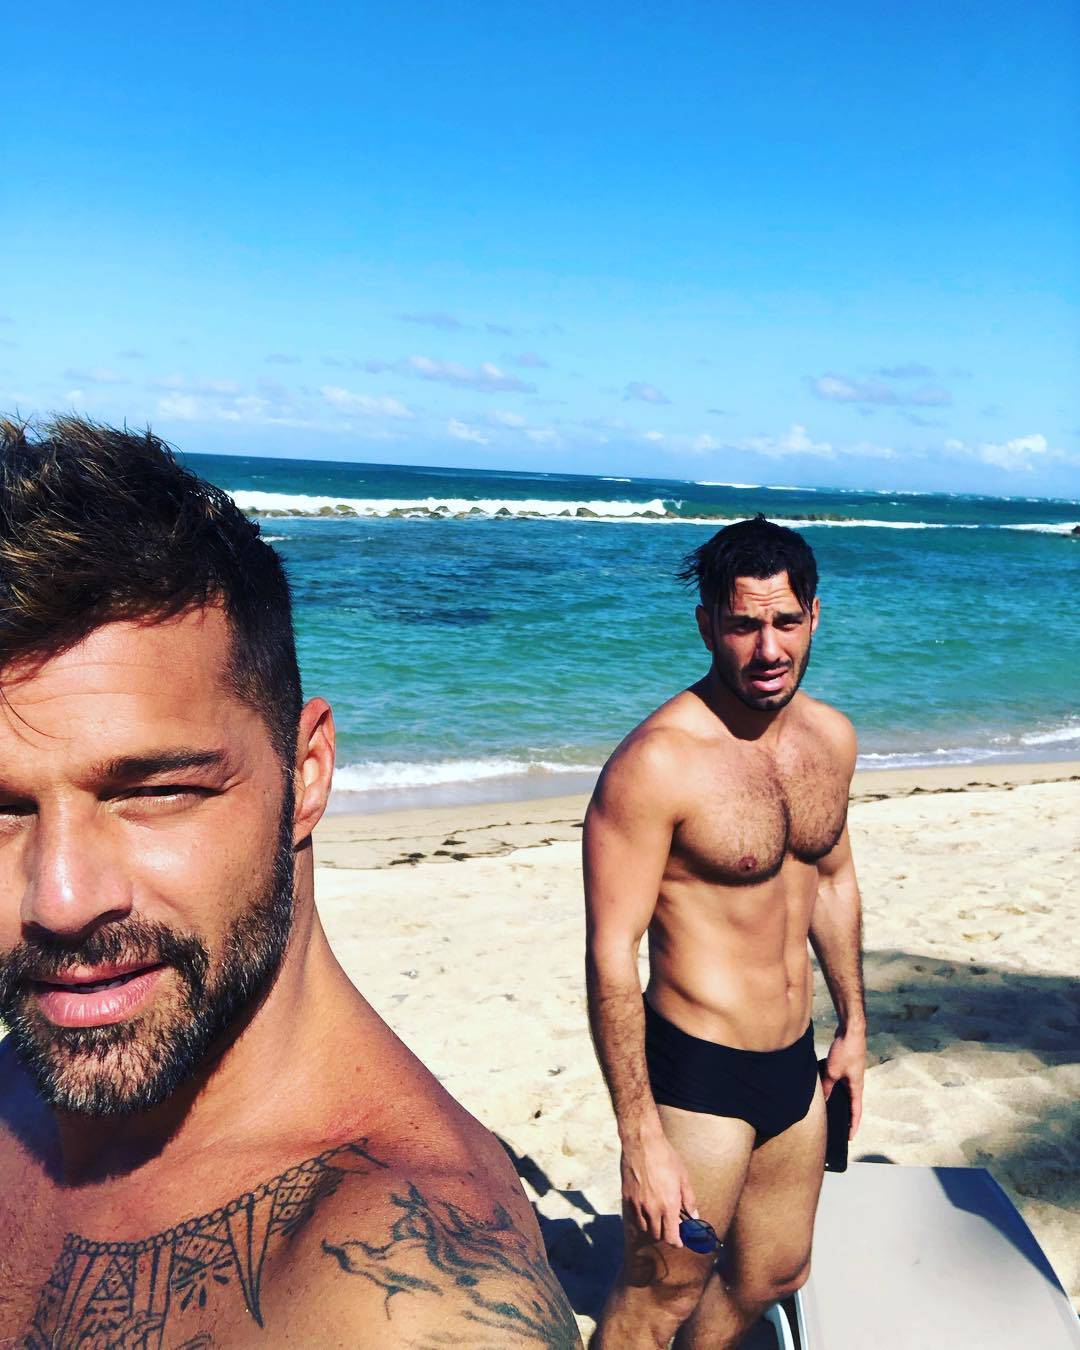 Ricky Martin slavi 51. rođendan: Gay sam i to kažem s ponosom!